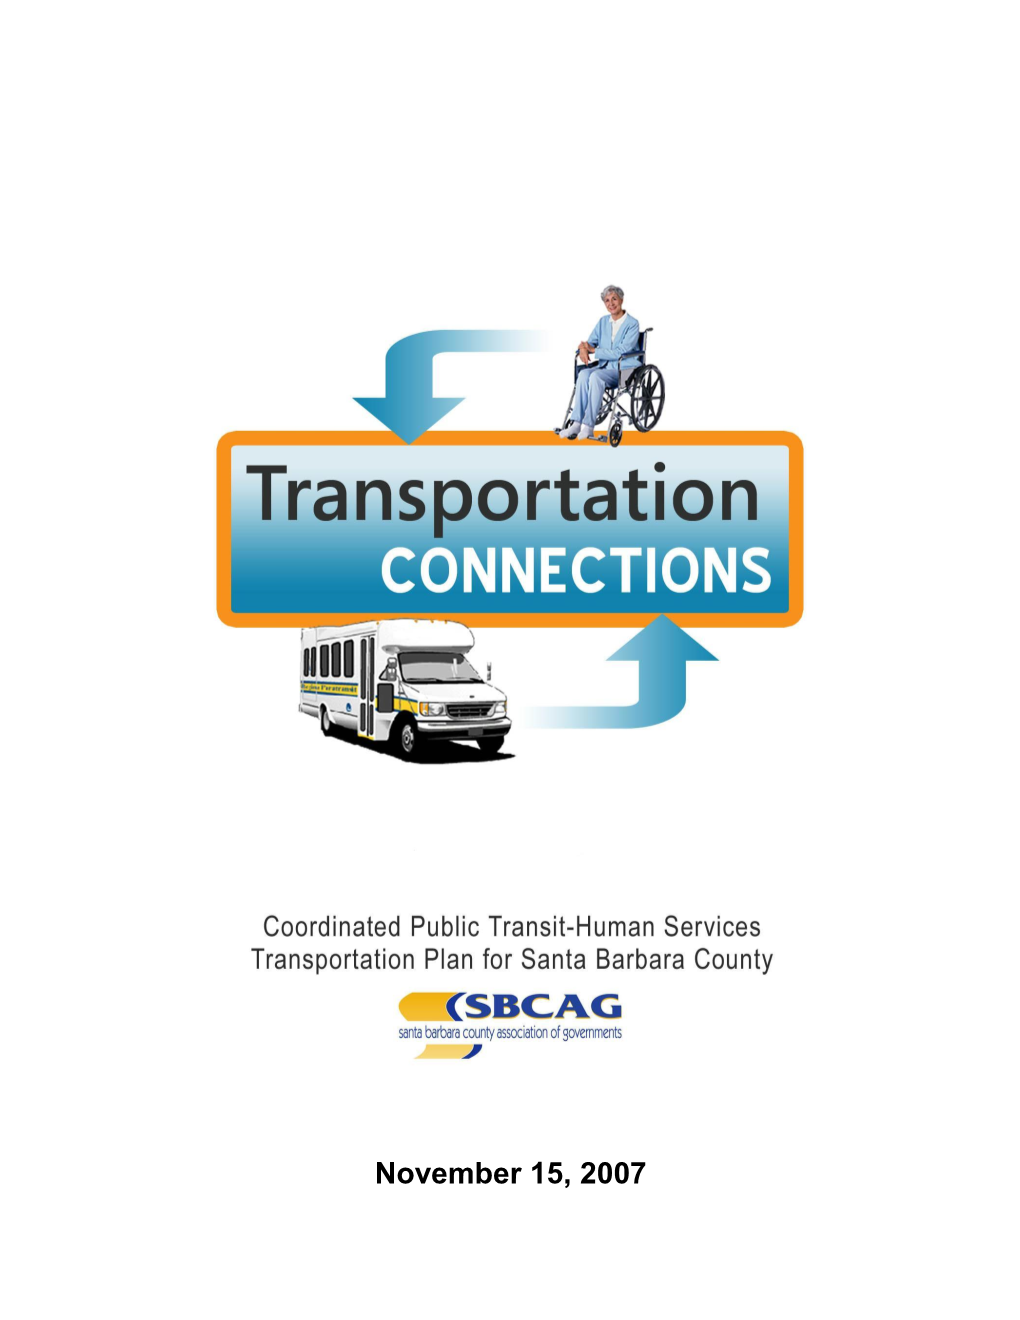 Coordinated Public Transit-Human Service Transportation